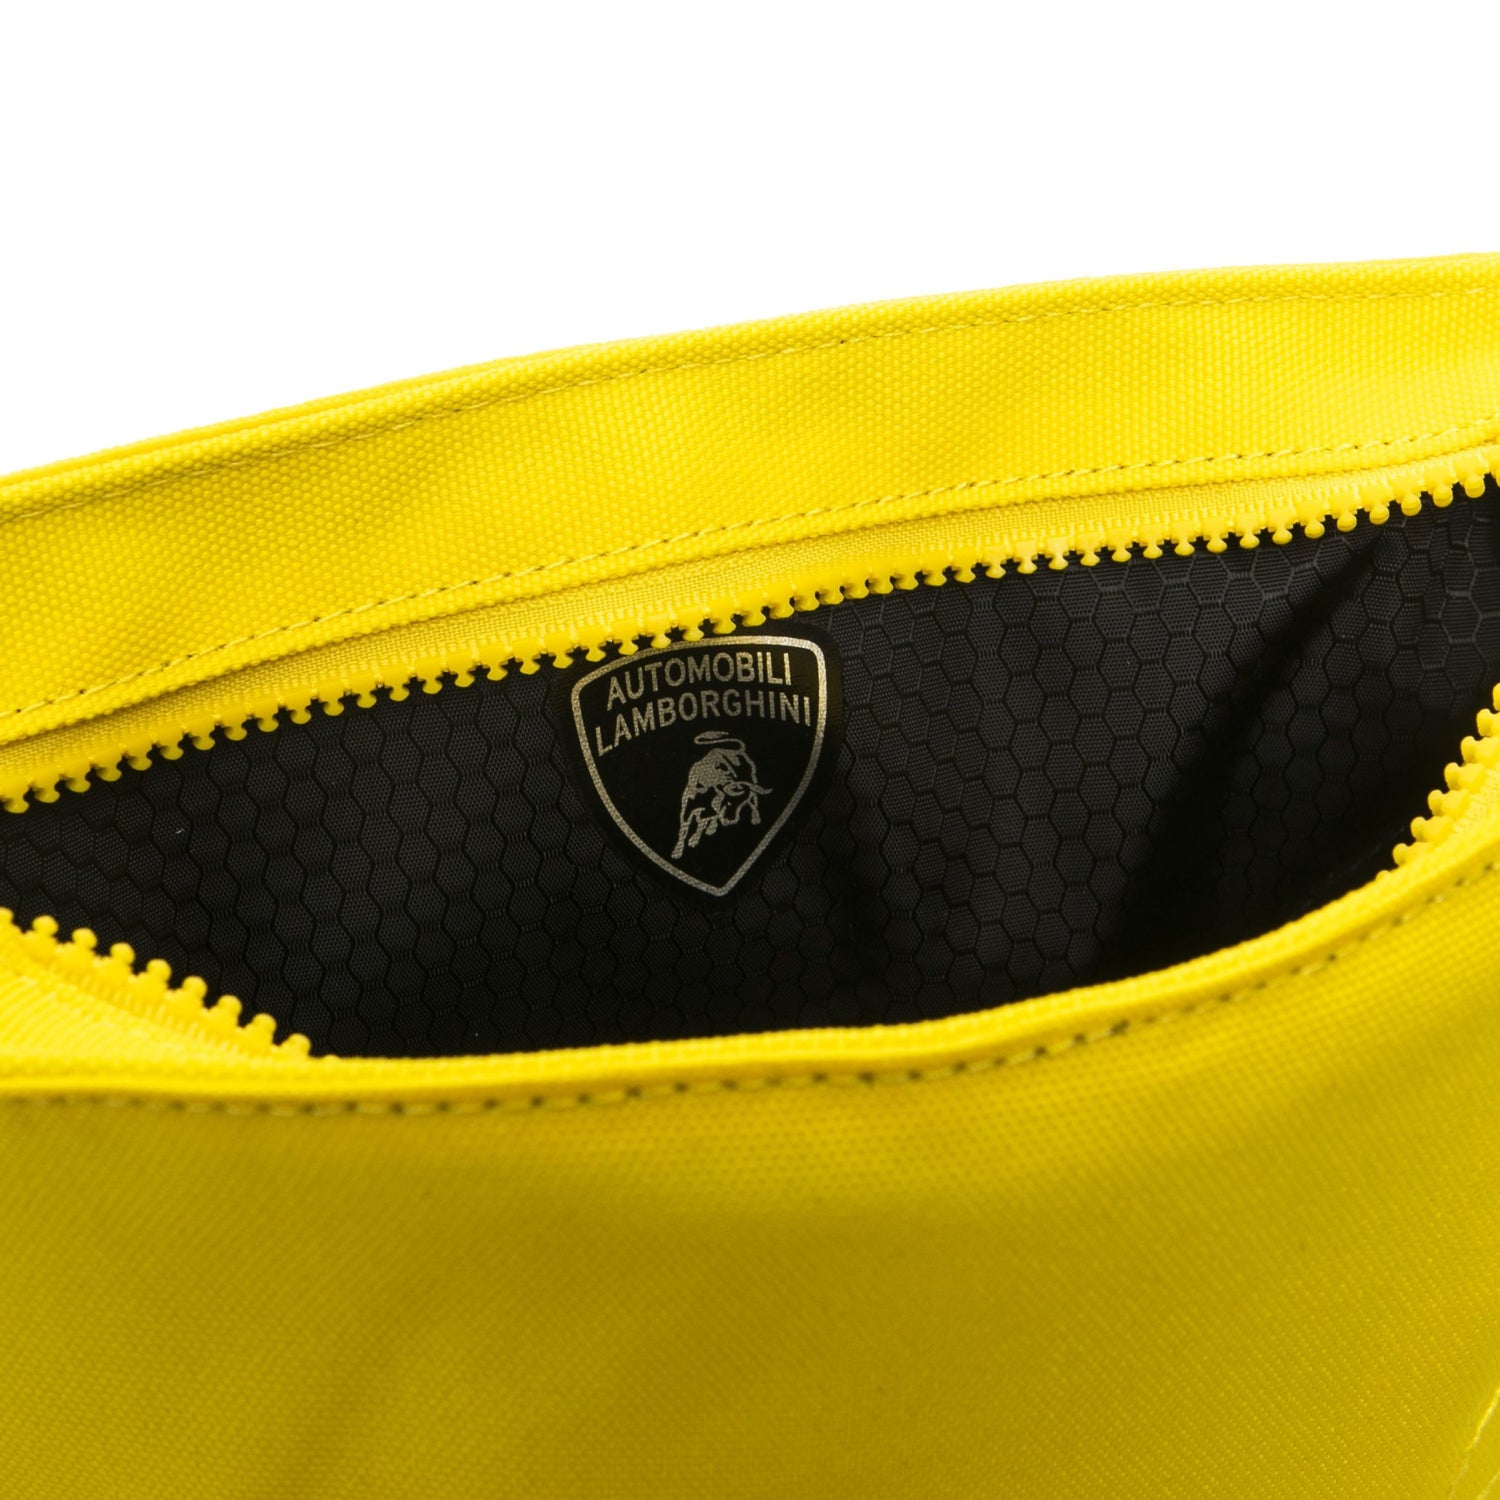 Yellow Polyester Messenger Bag